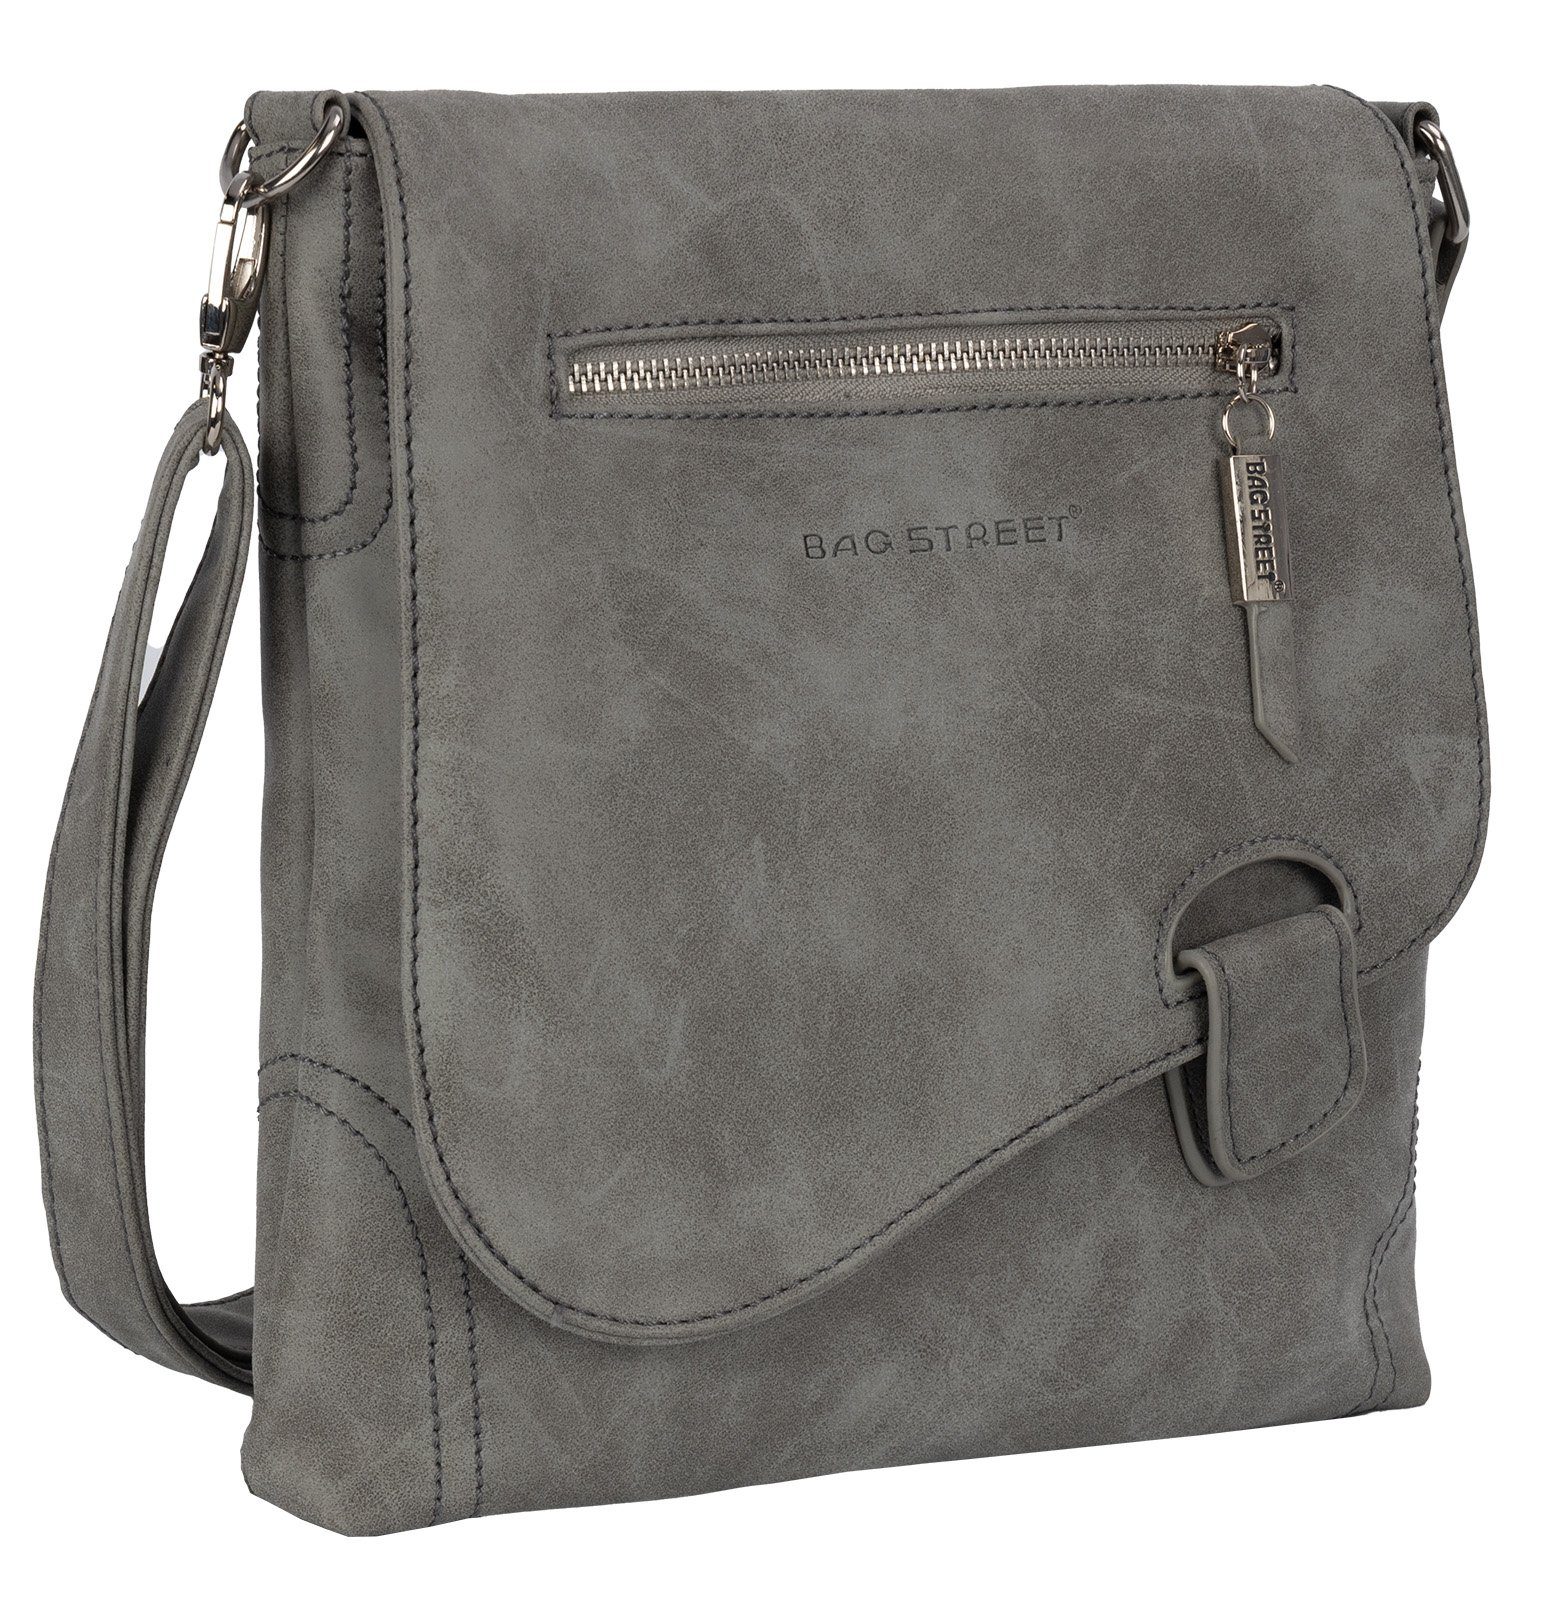 BAG STREET Schlüsseltasche Bag Street Damentasche Umhängetasche Handtasche Schultertasche T0104, als Schultertasche, Umhängetasche tragbar GRAU